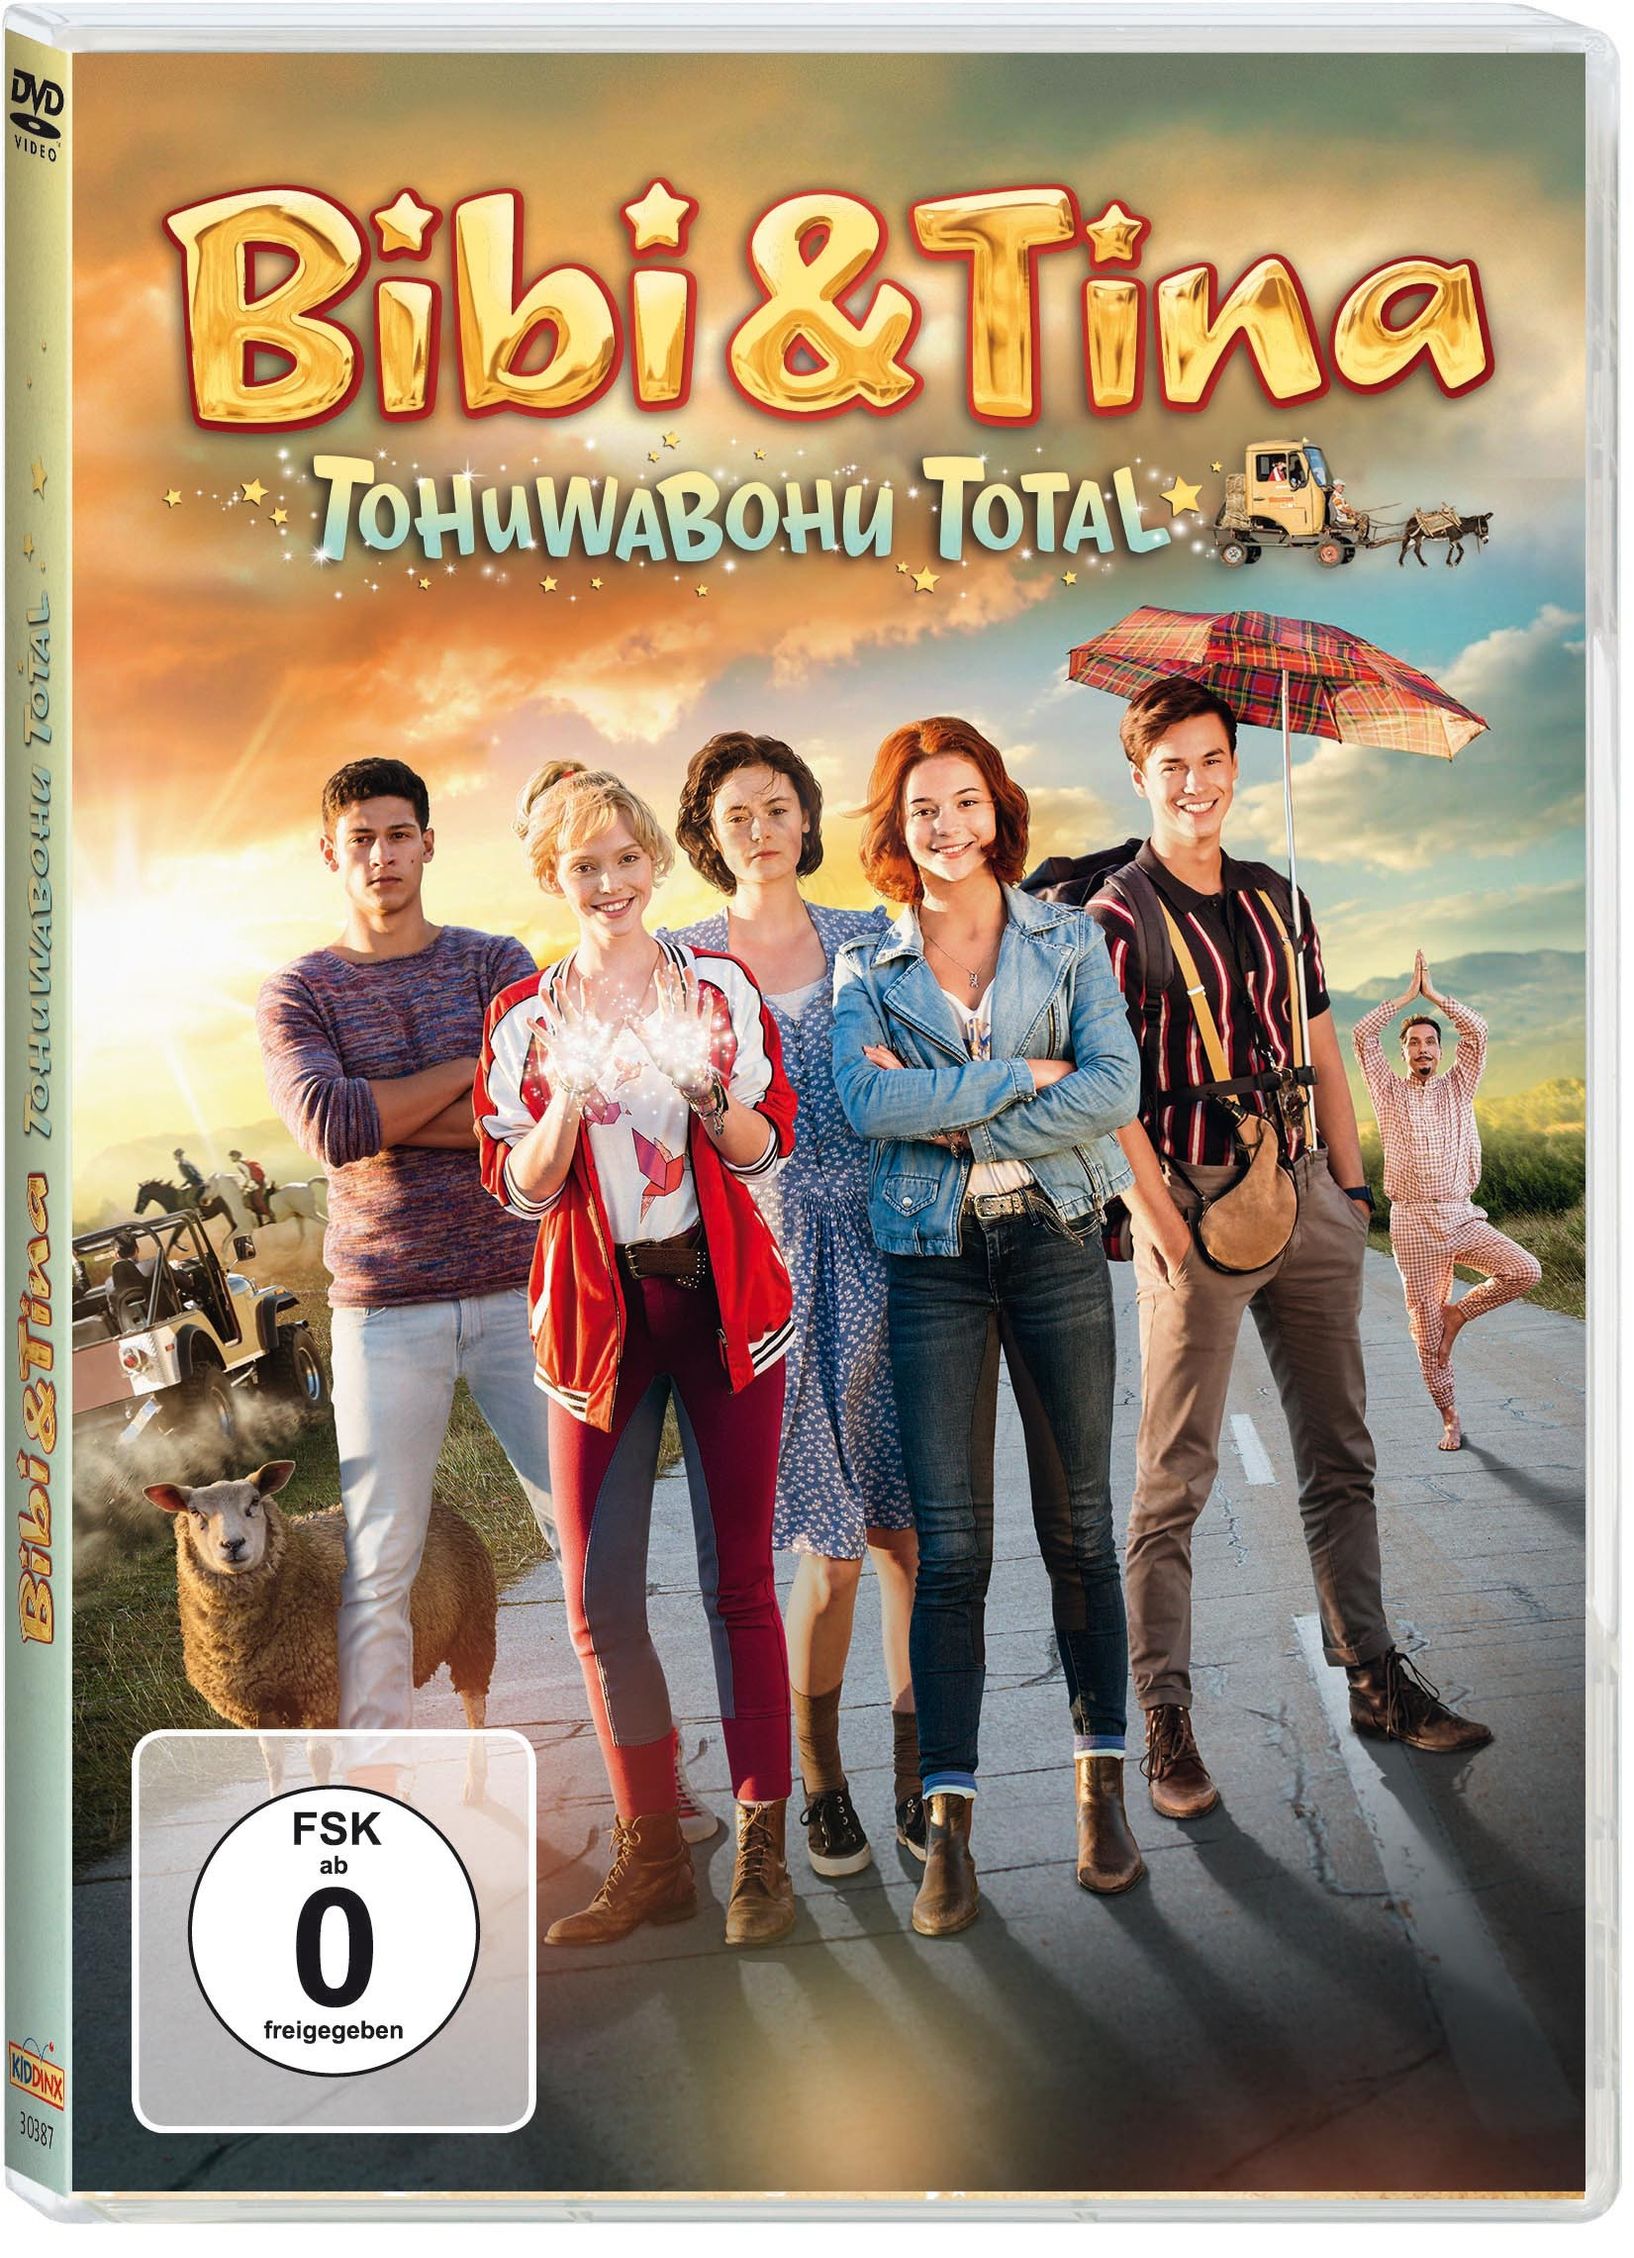 Bibi und Tina 4: Tohuwabohu total DVD bei Weltbild.de bestellen